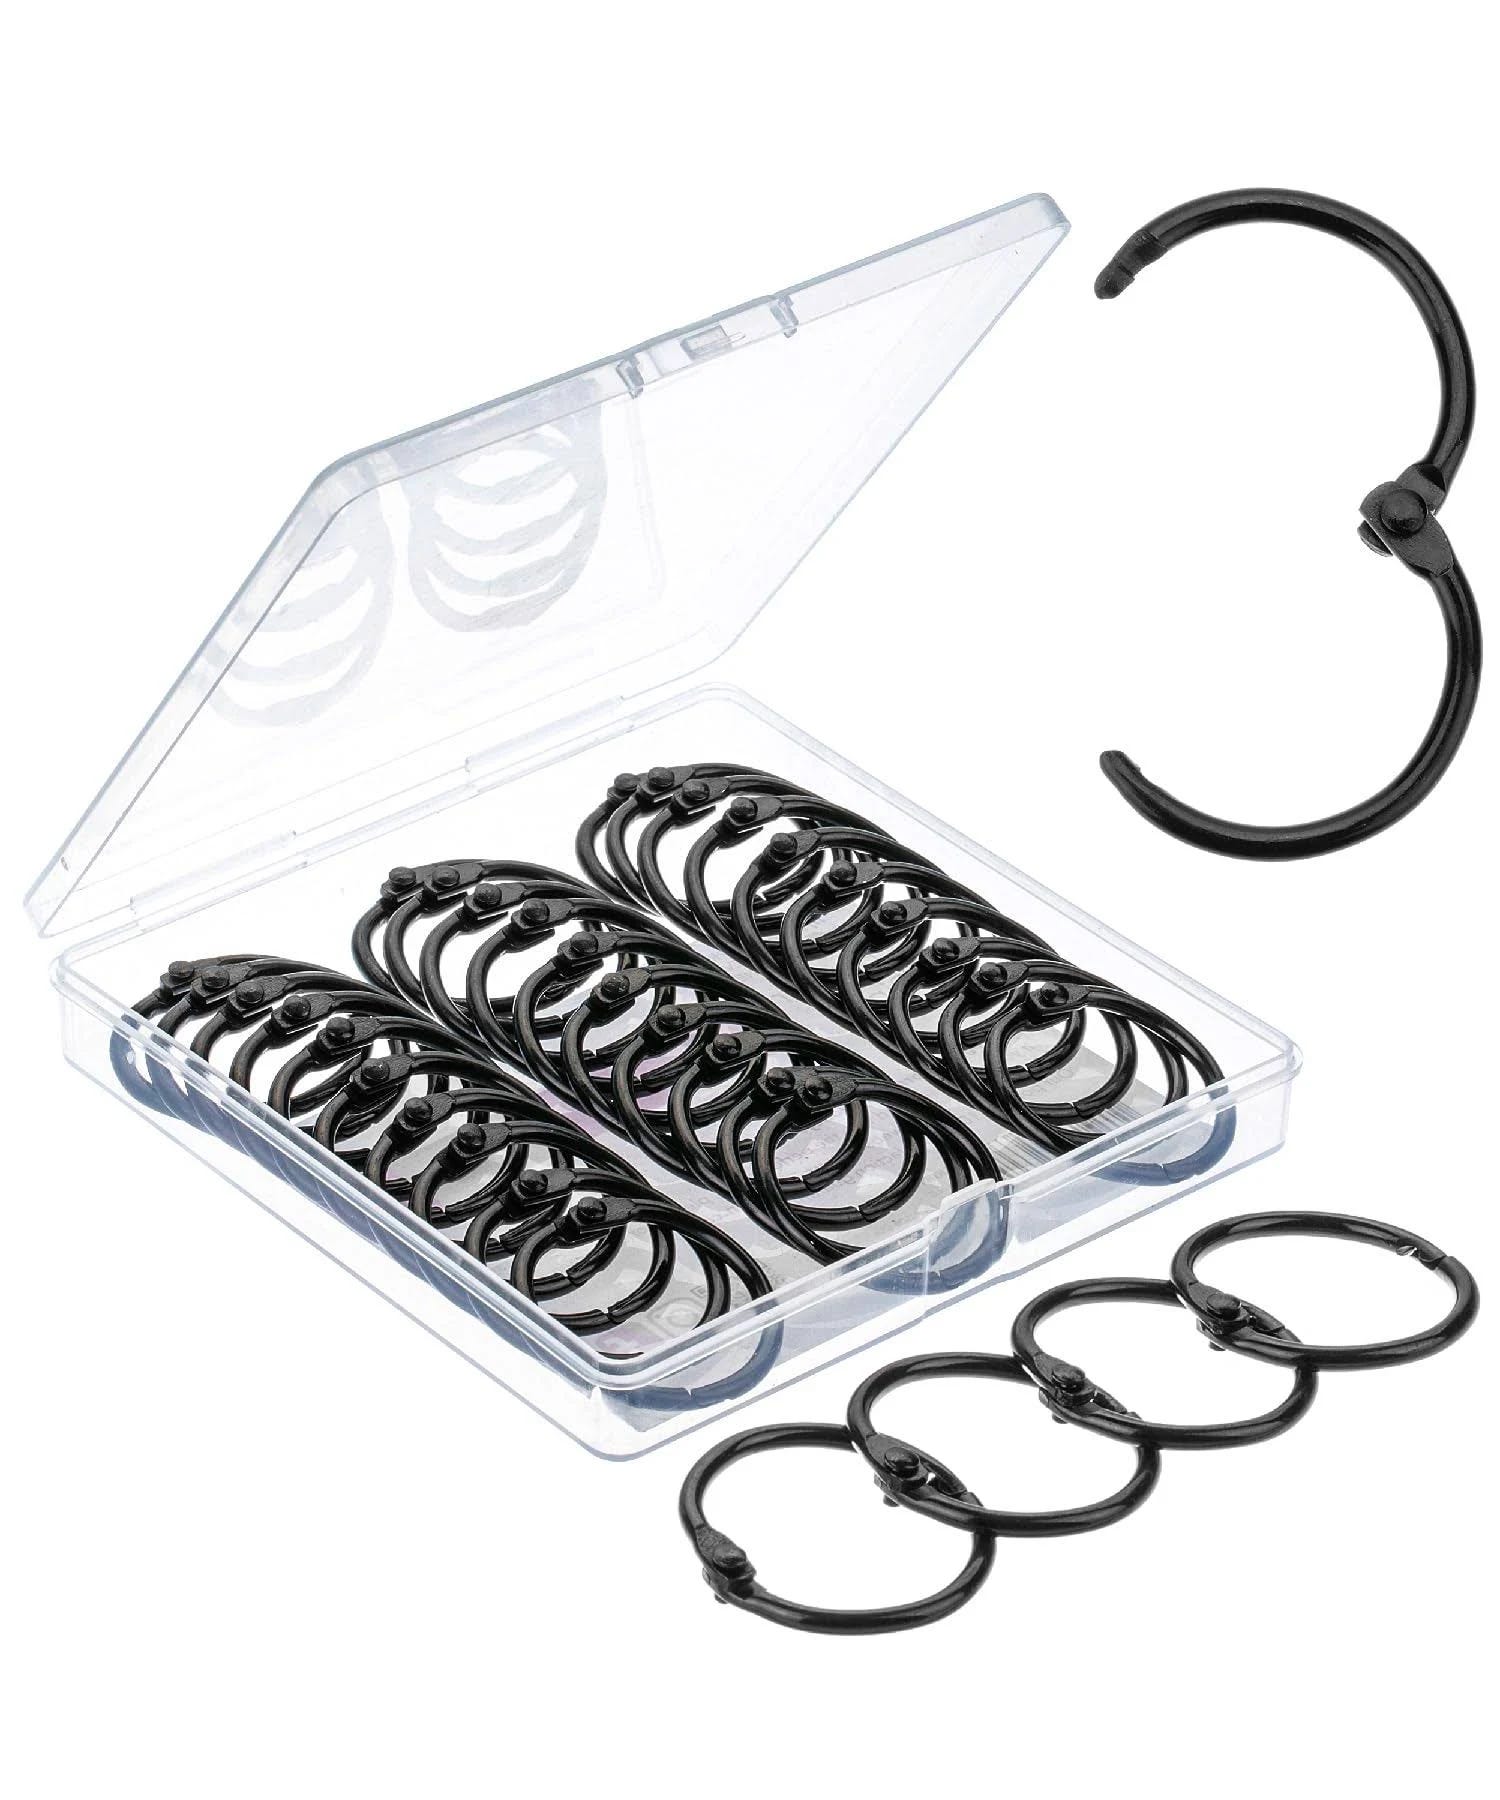 Professional Black Metal Binder Rings Set (40 Pieces, 1Inch) with Storage Box | Image